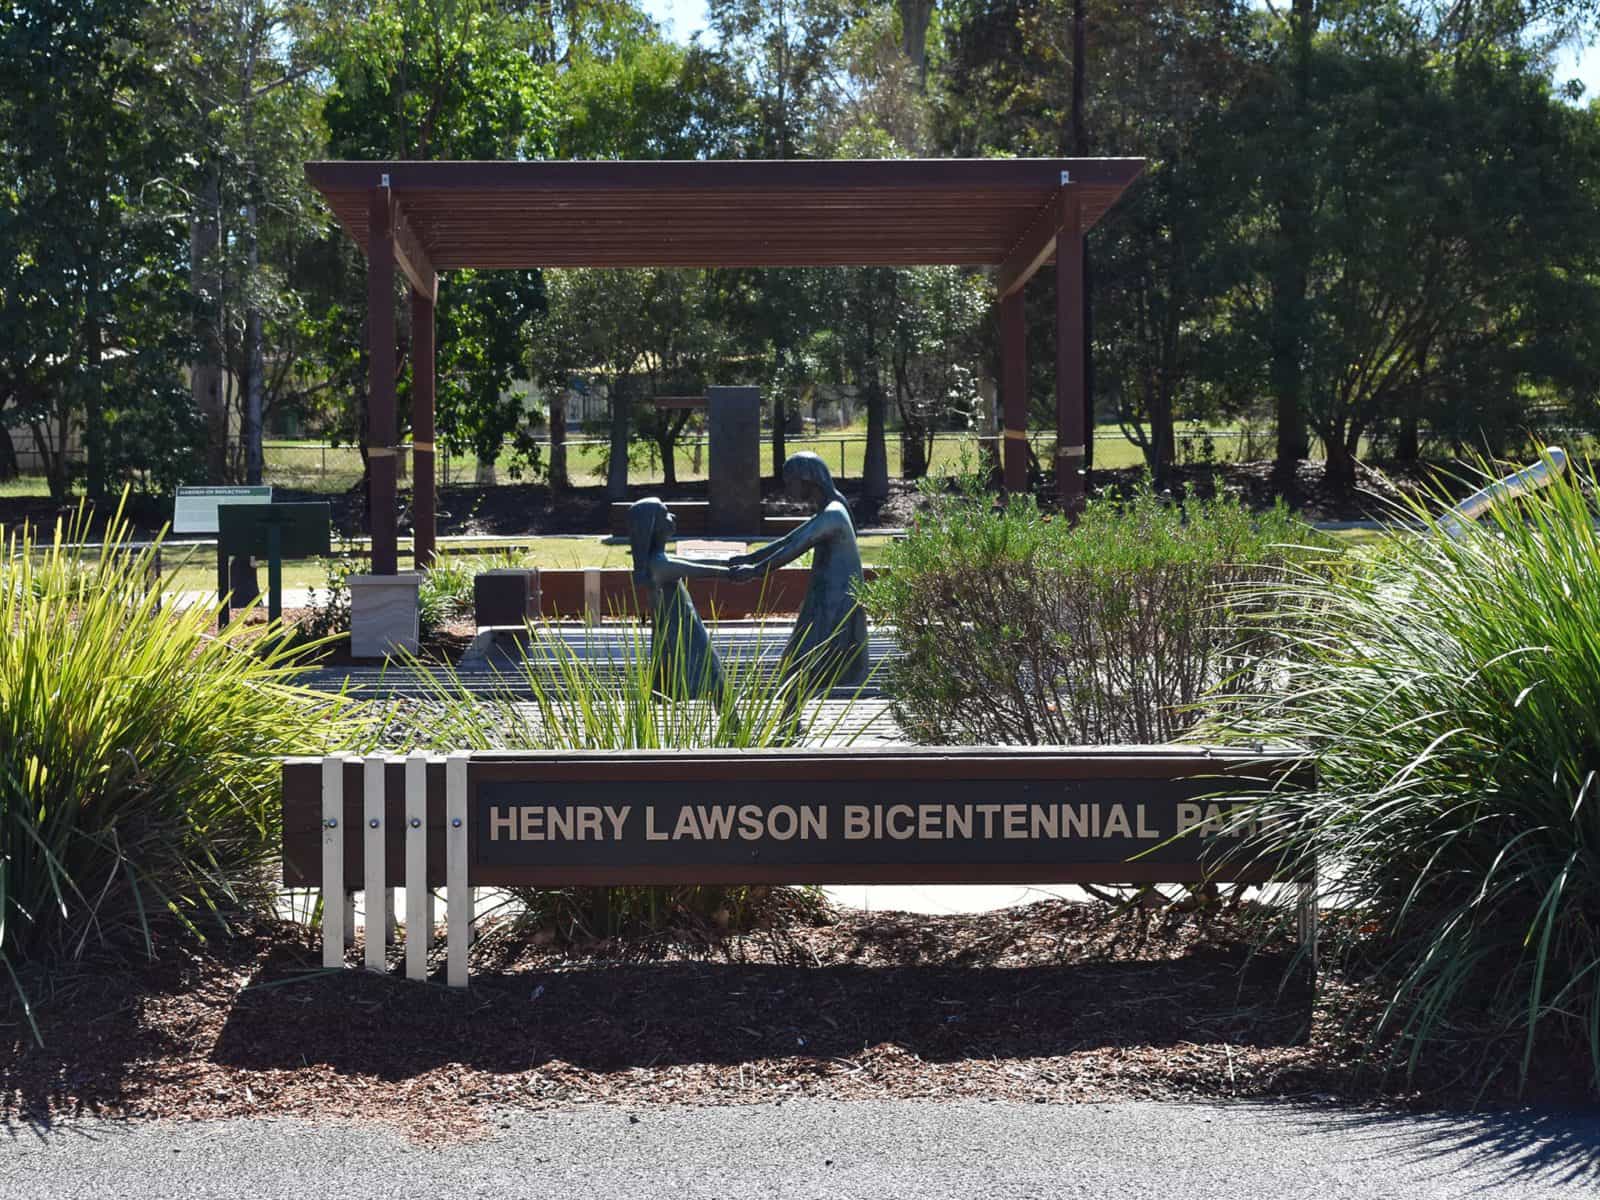 Henry Lawson Bicentennial Park